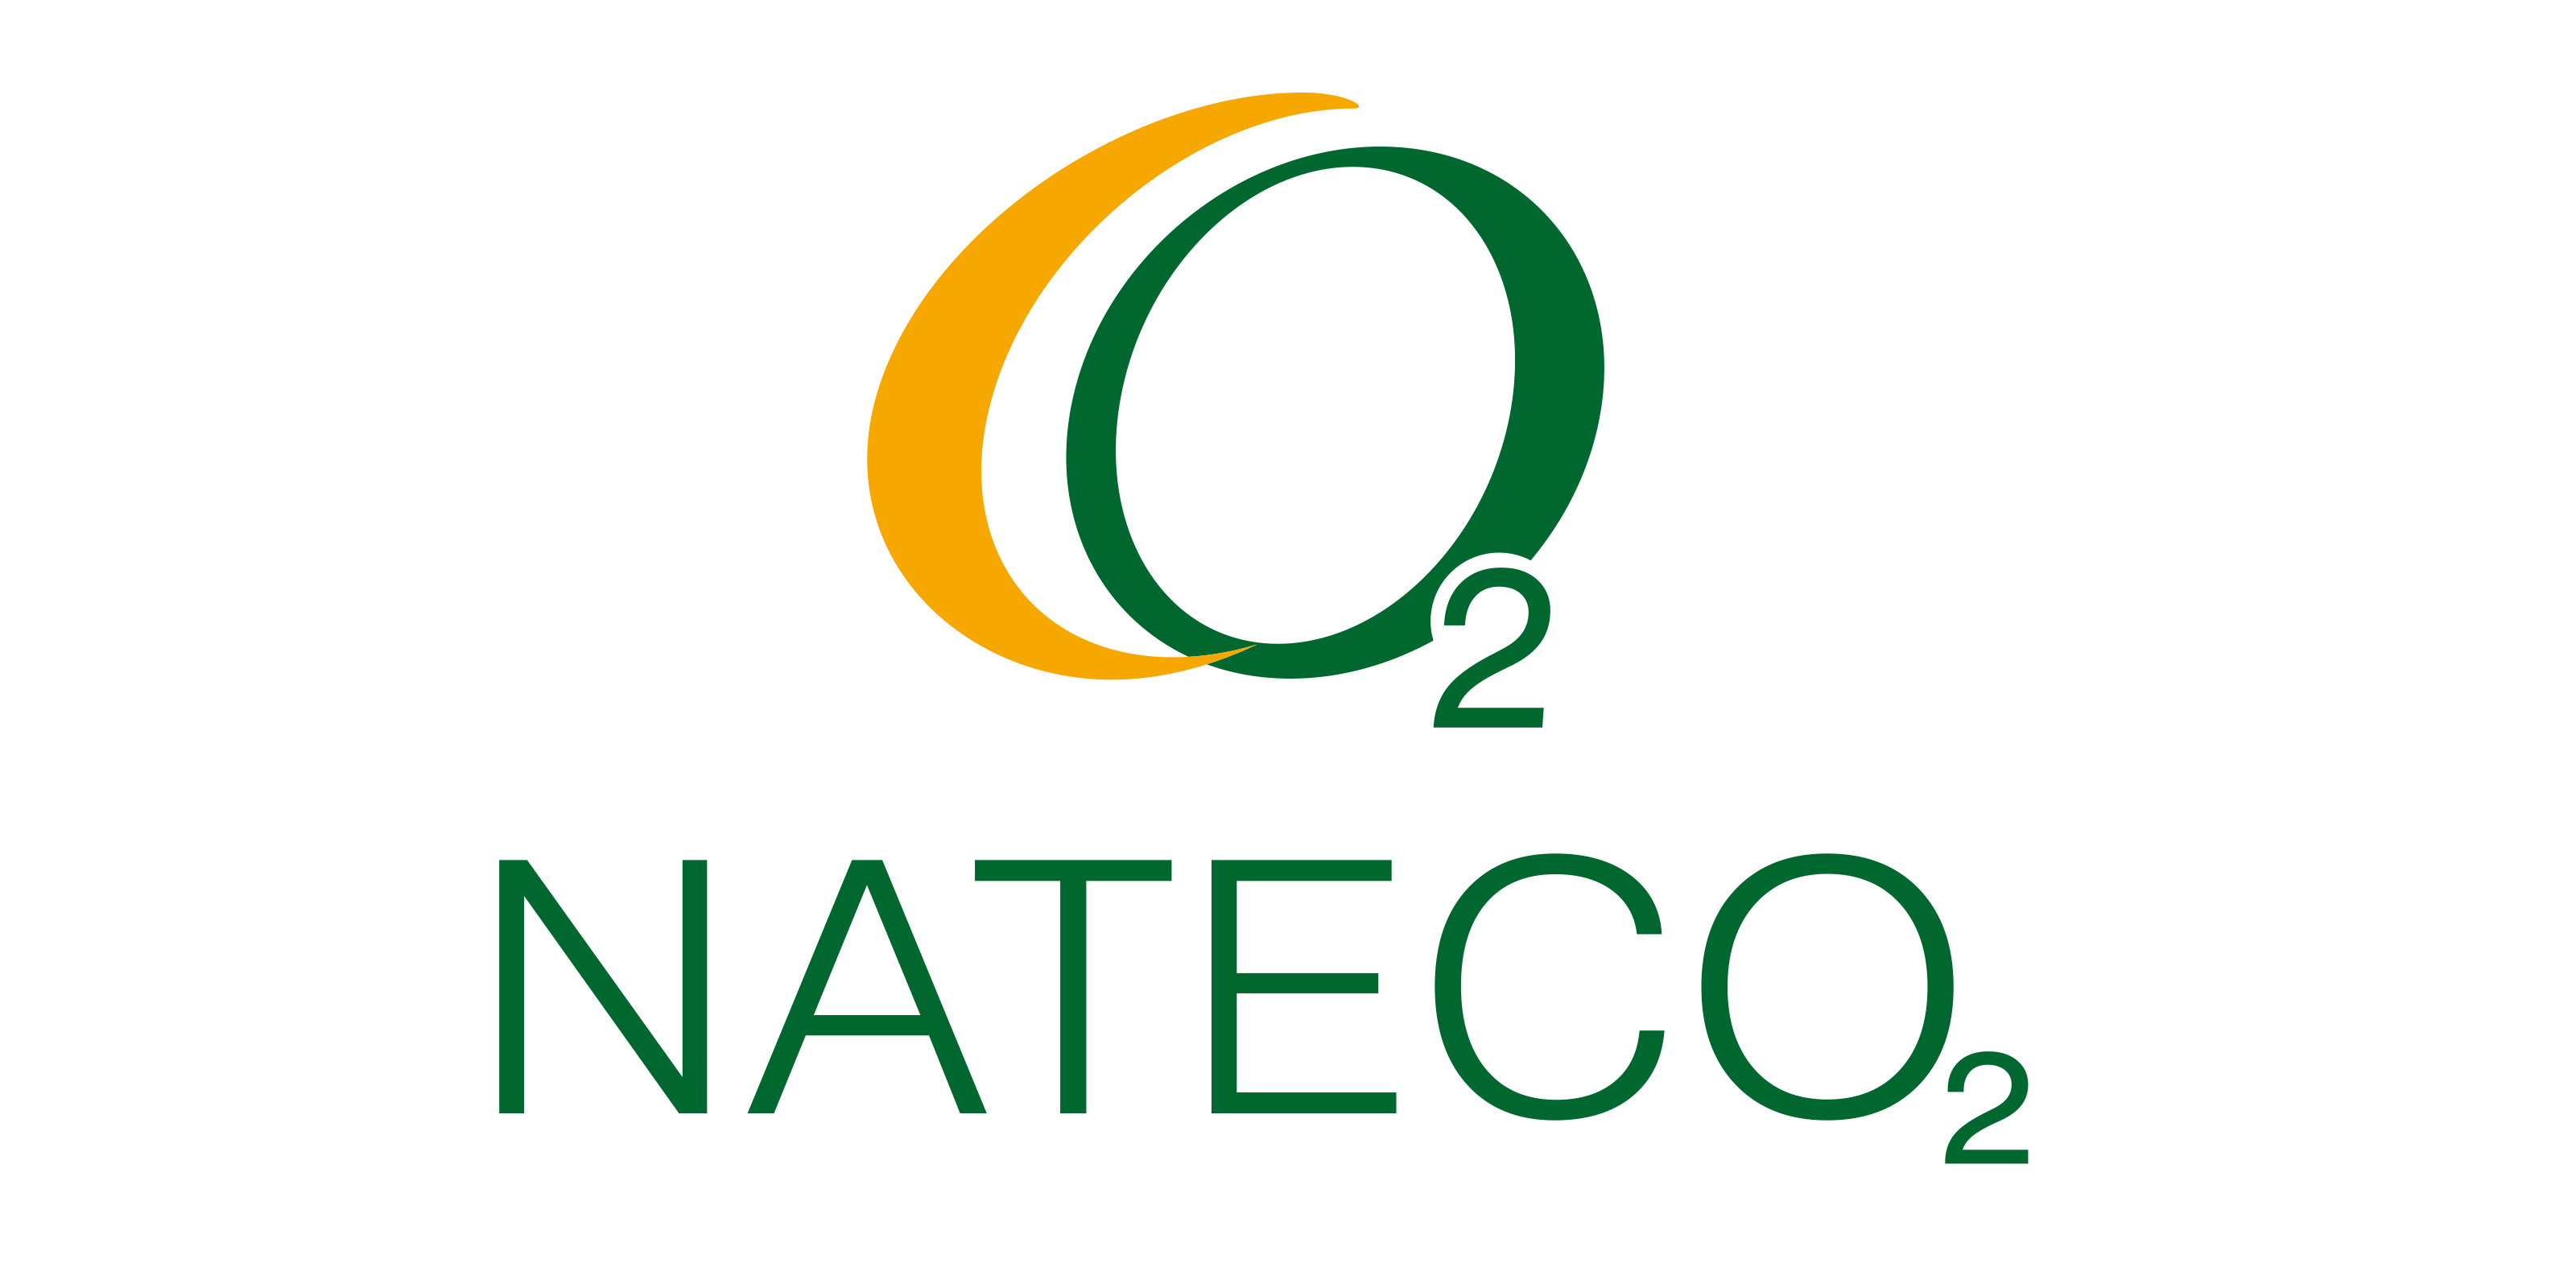 Nateco2 Logo